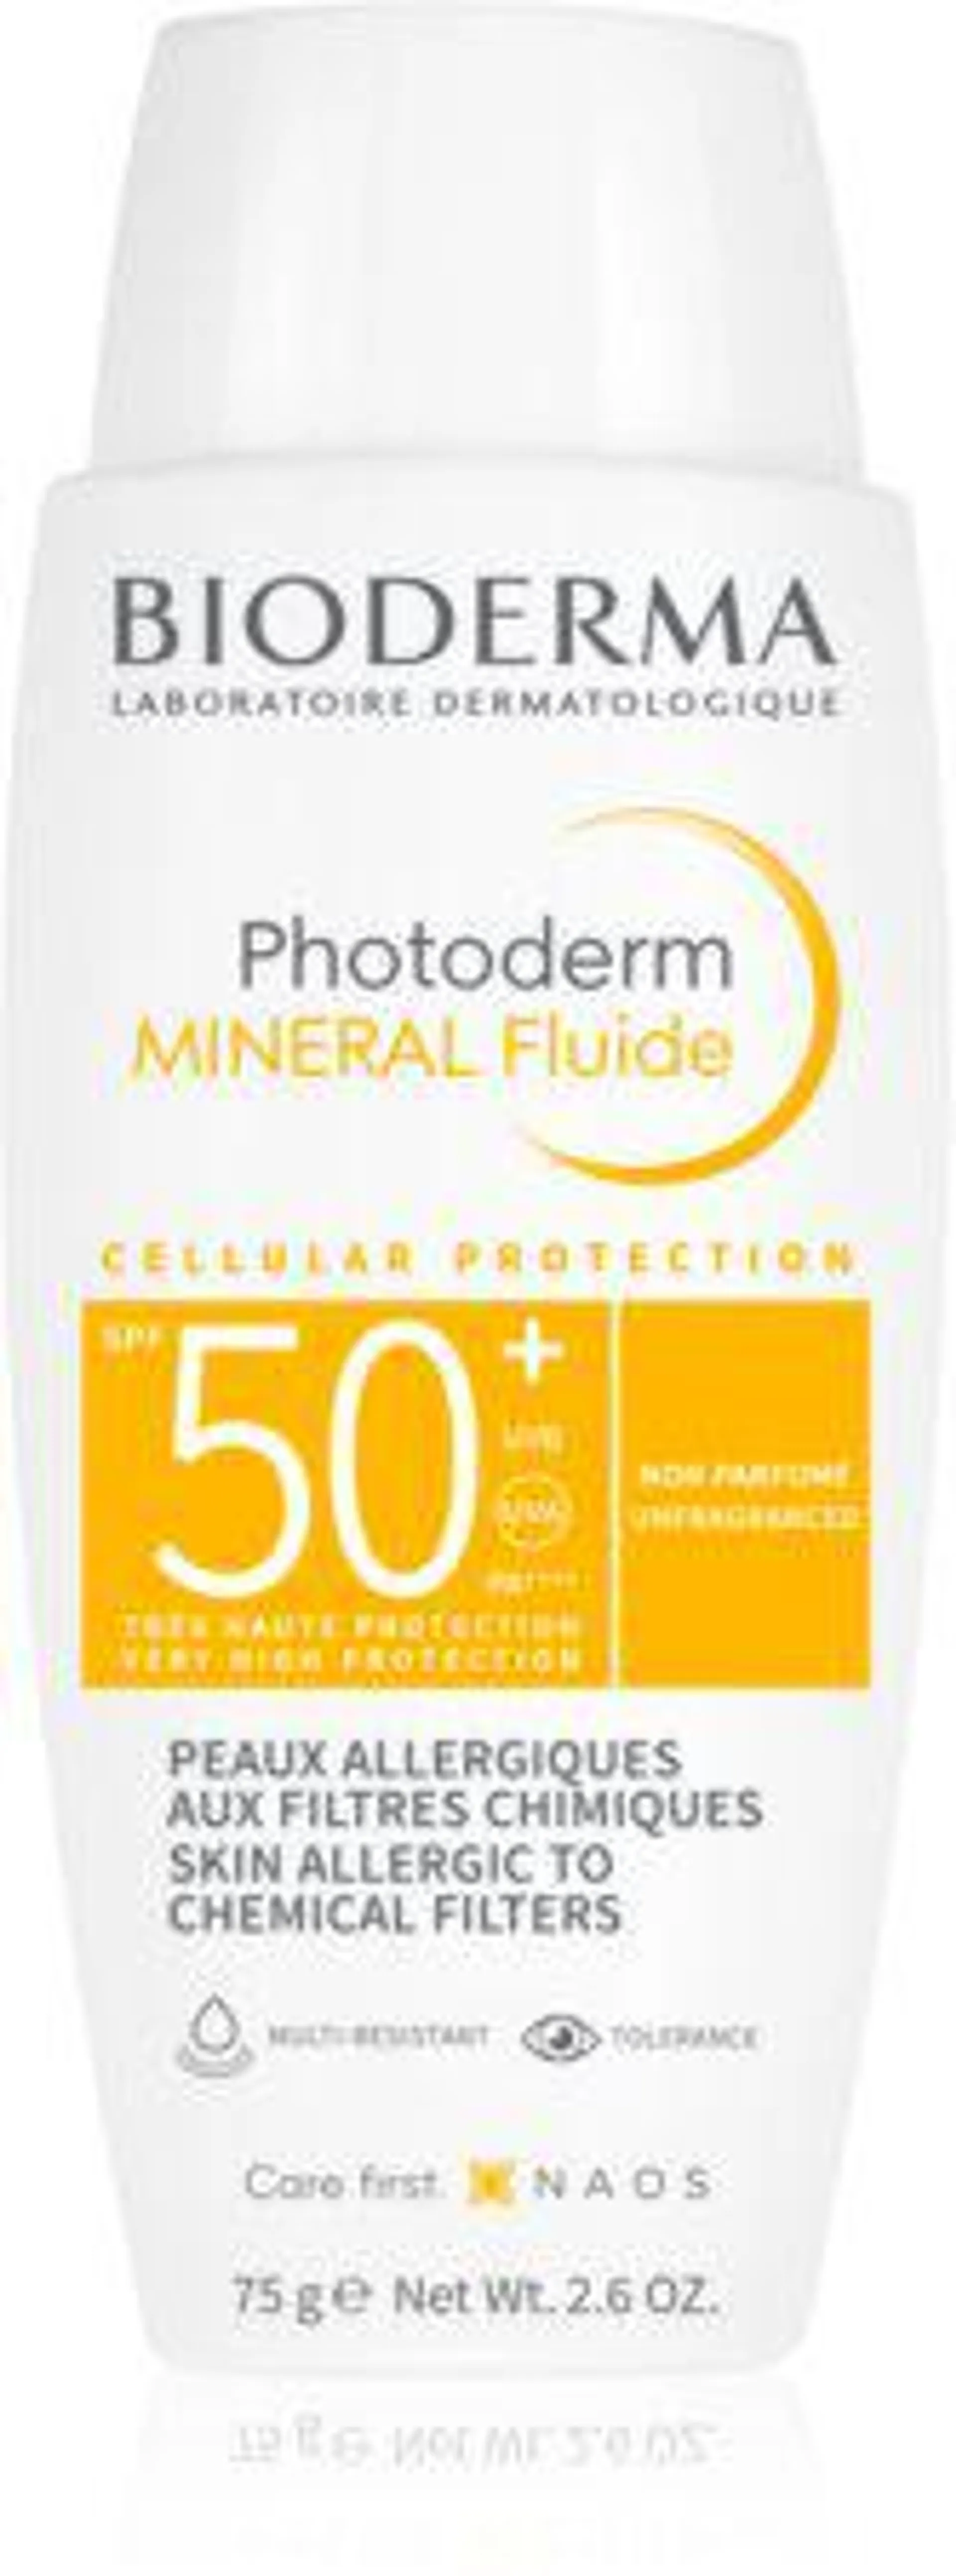 Photoderm Mineral